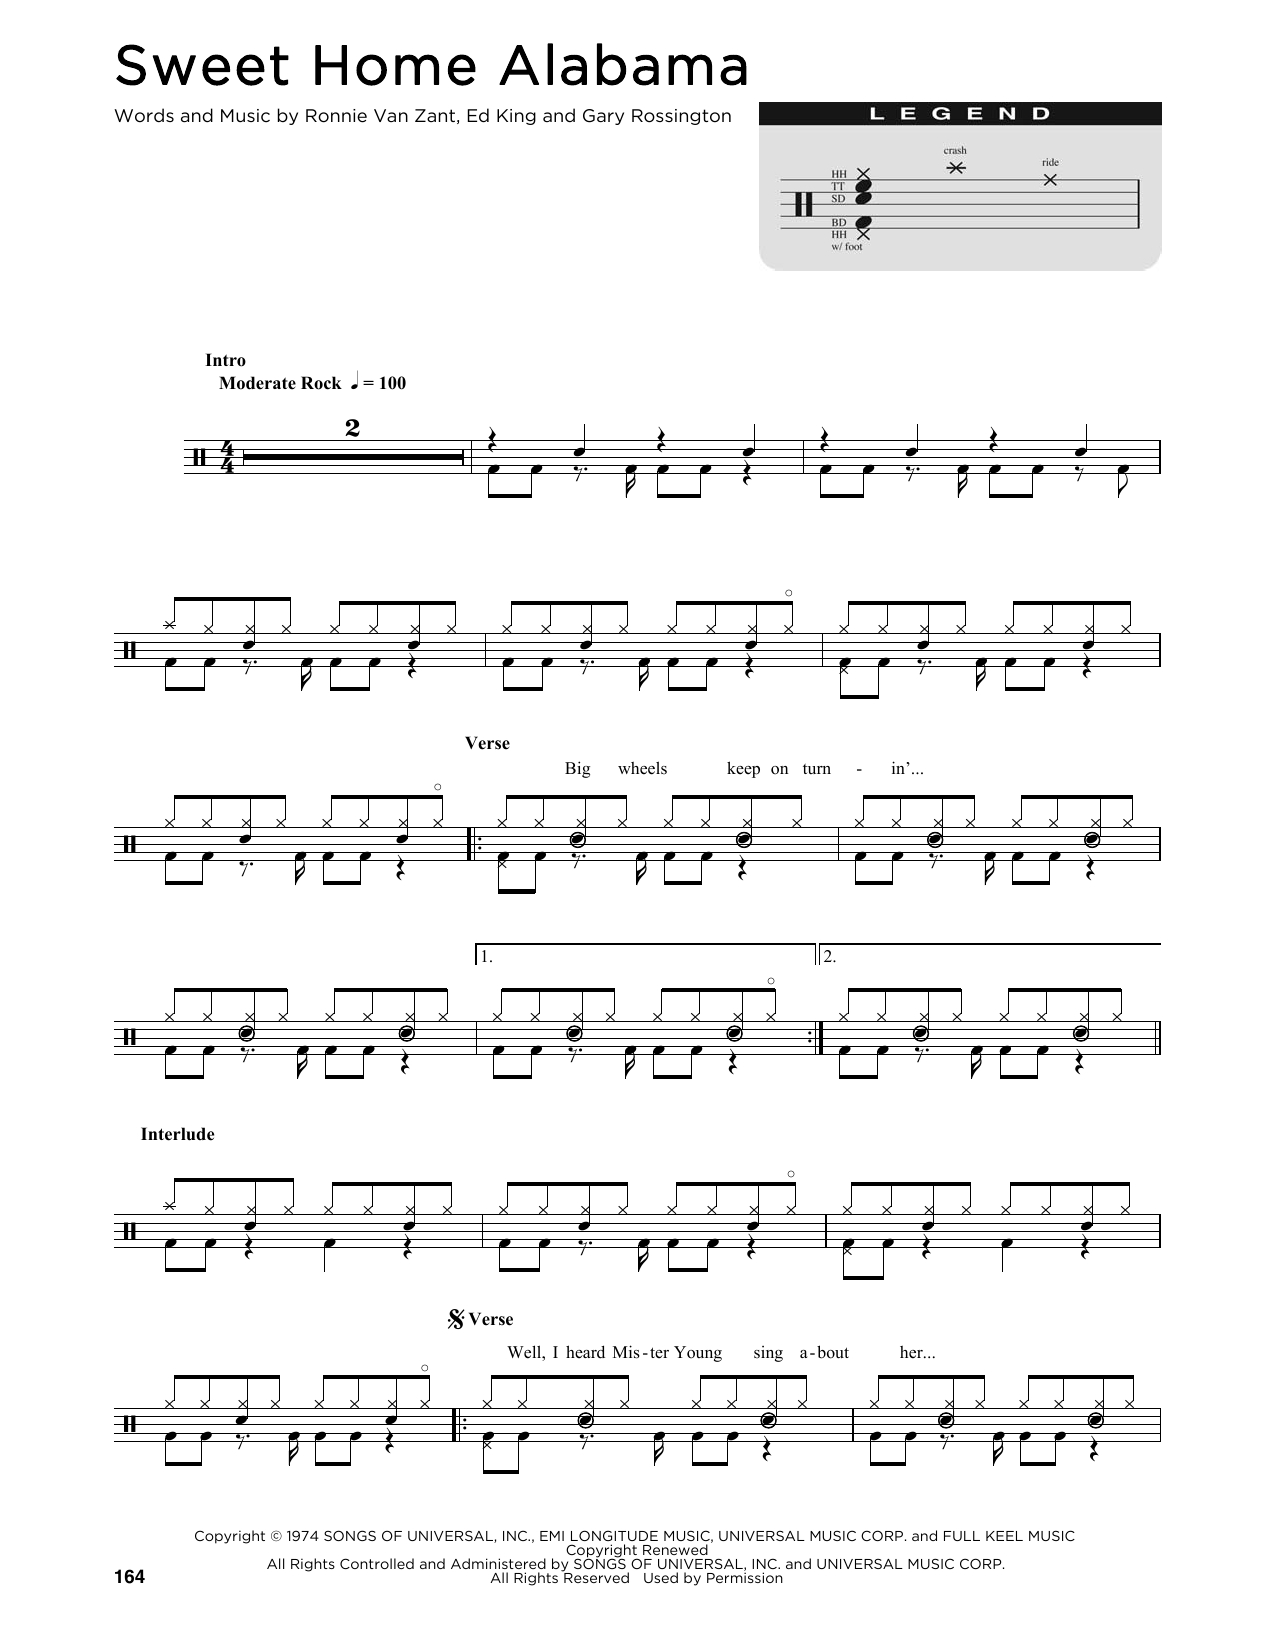 Sweet Home Alabama Chords Sheet Music Digital Files To Print Licensed Ed King Digital Sheet